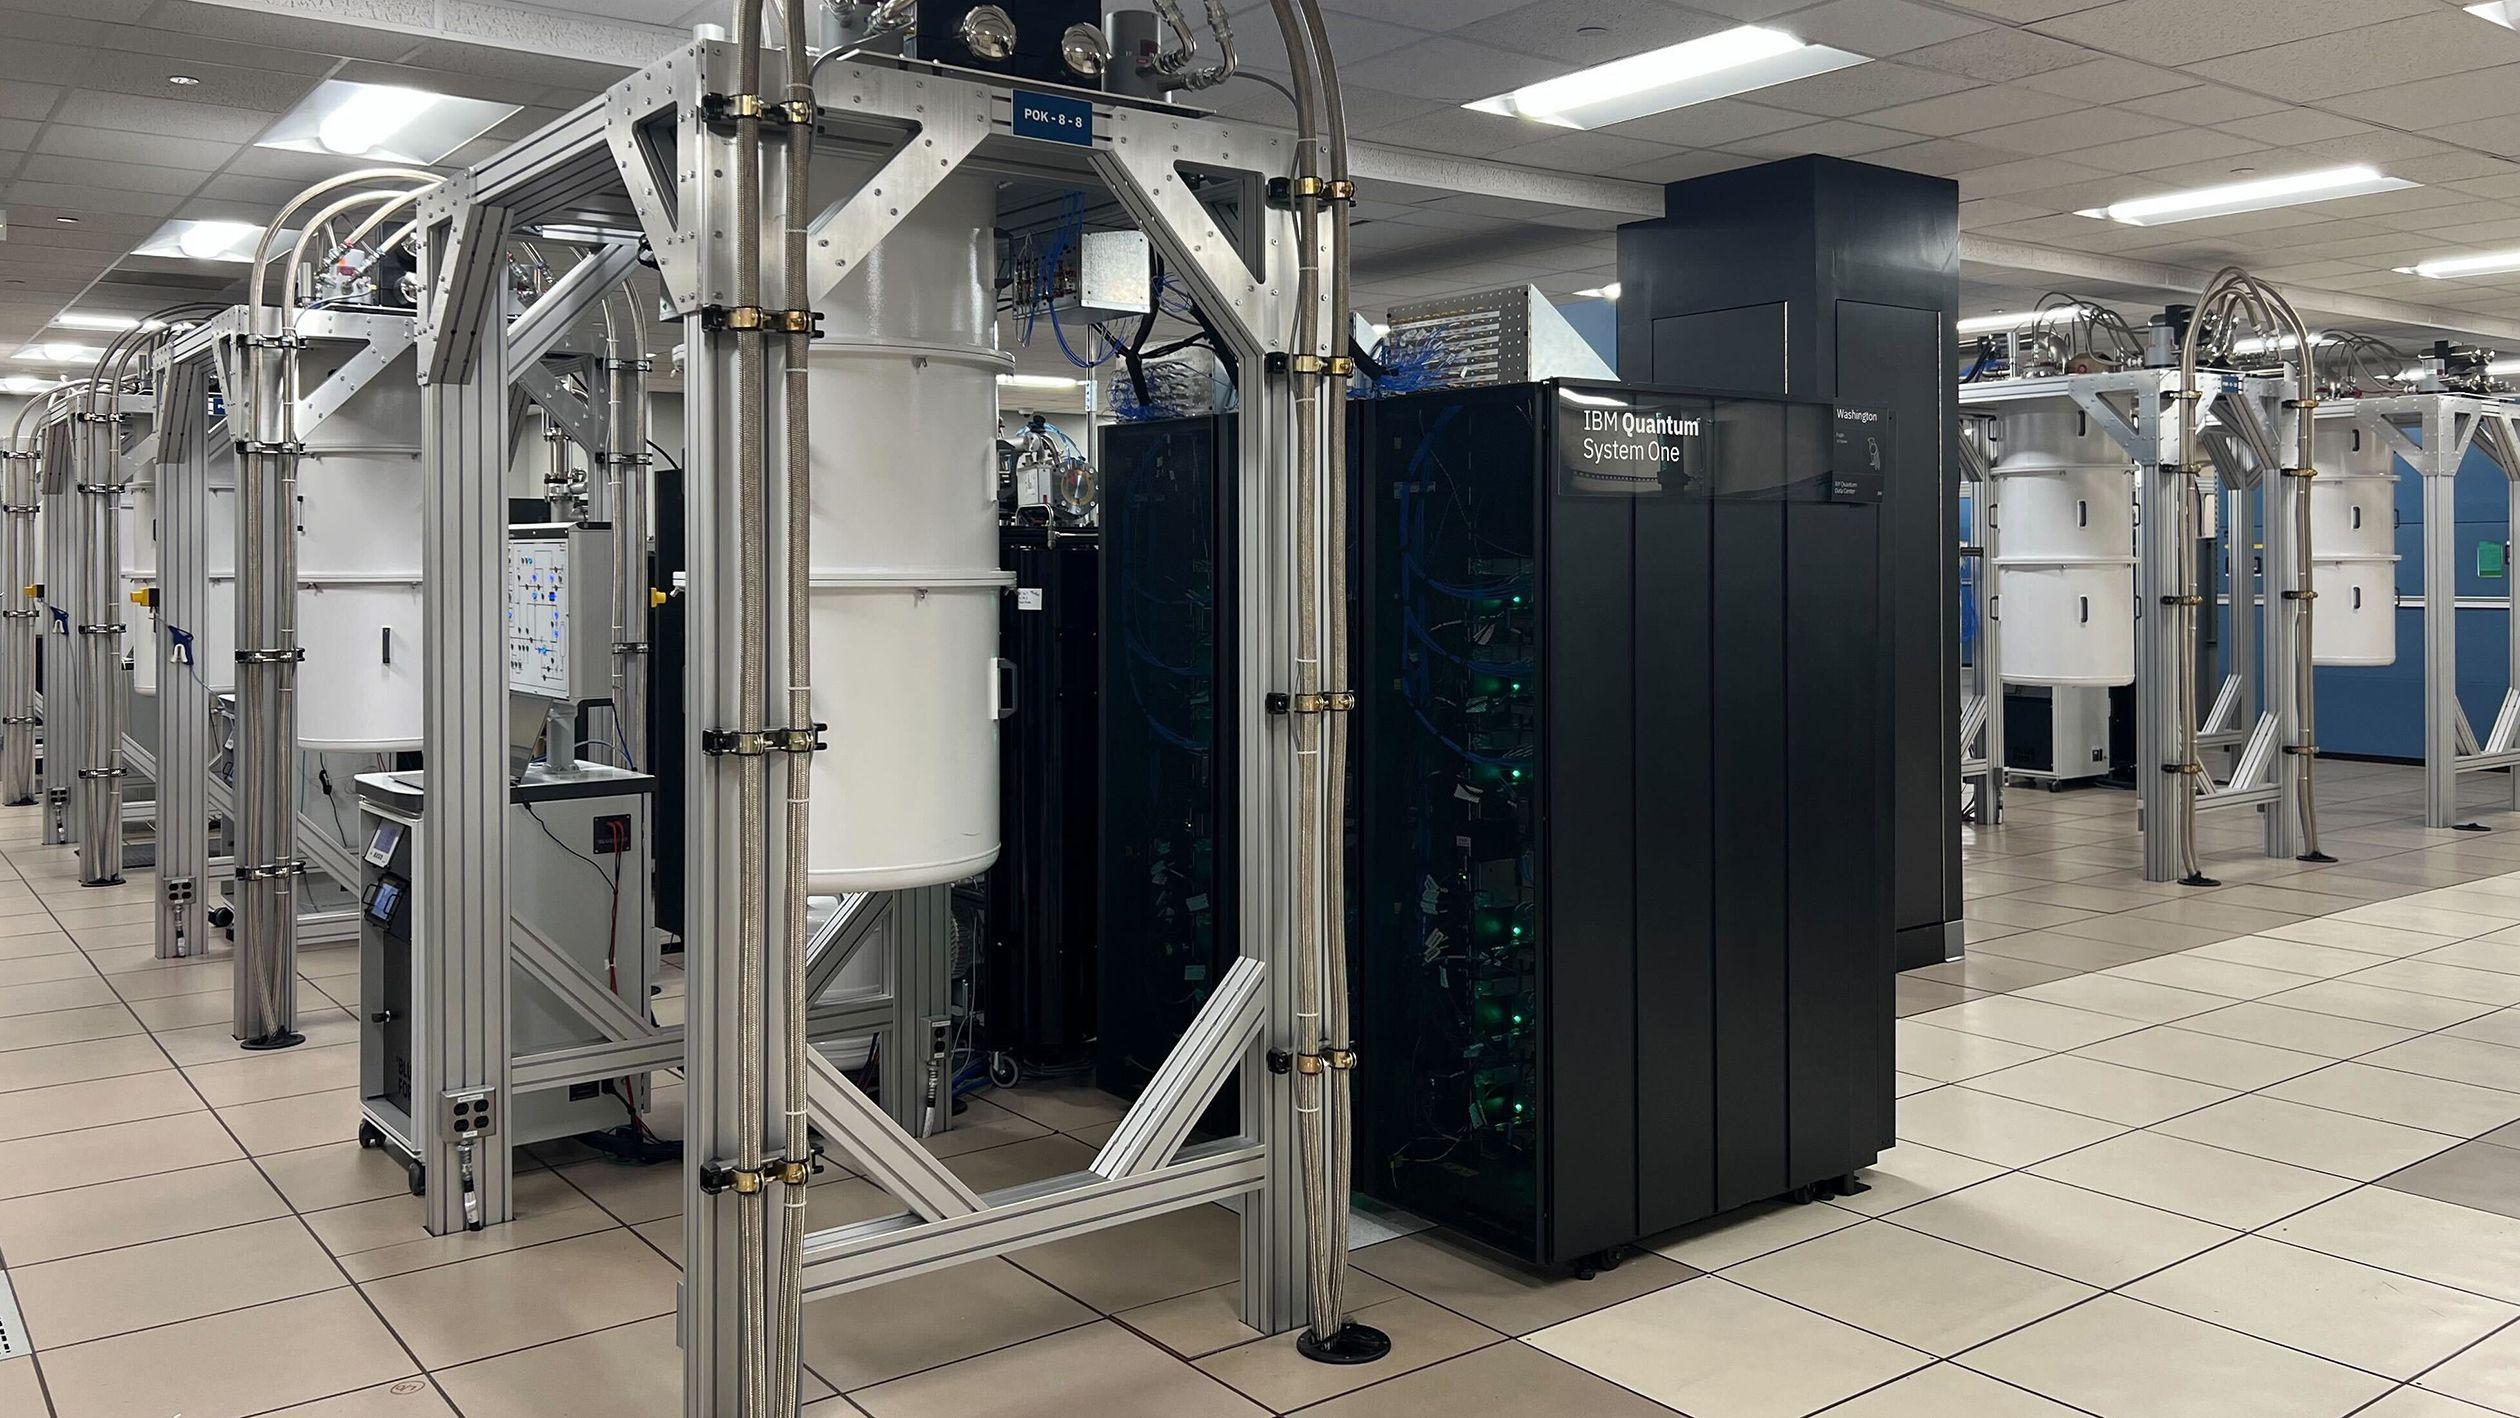 The IBM Quantum data center in Poughkeepsie, NY. (Credit: James O'Connor, IBM)